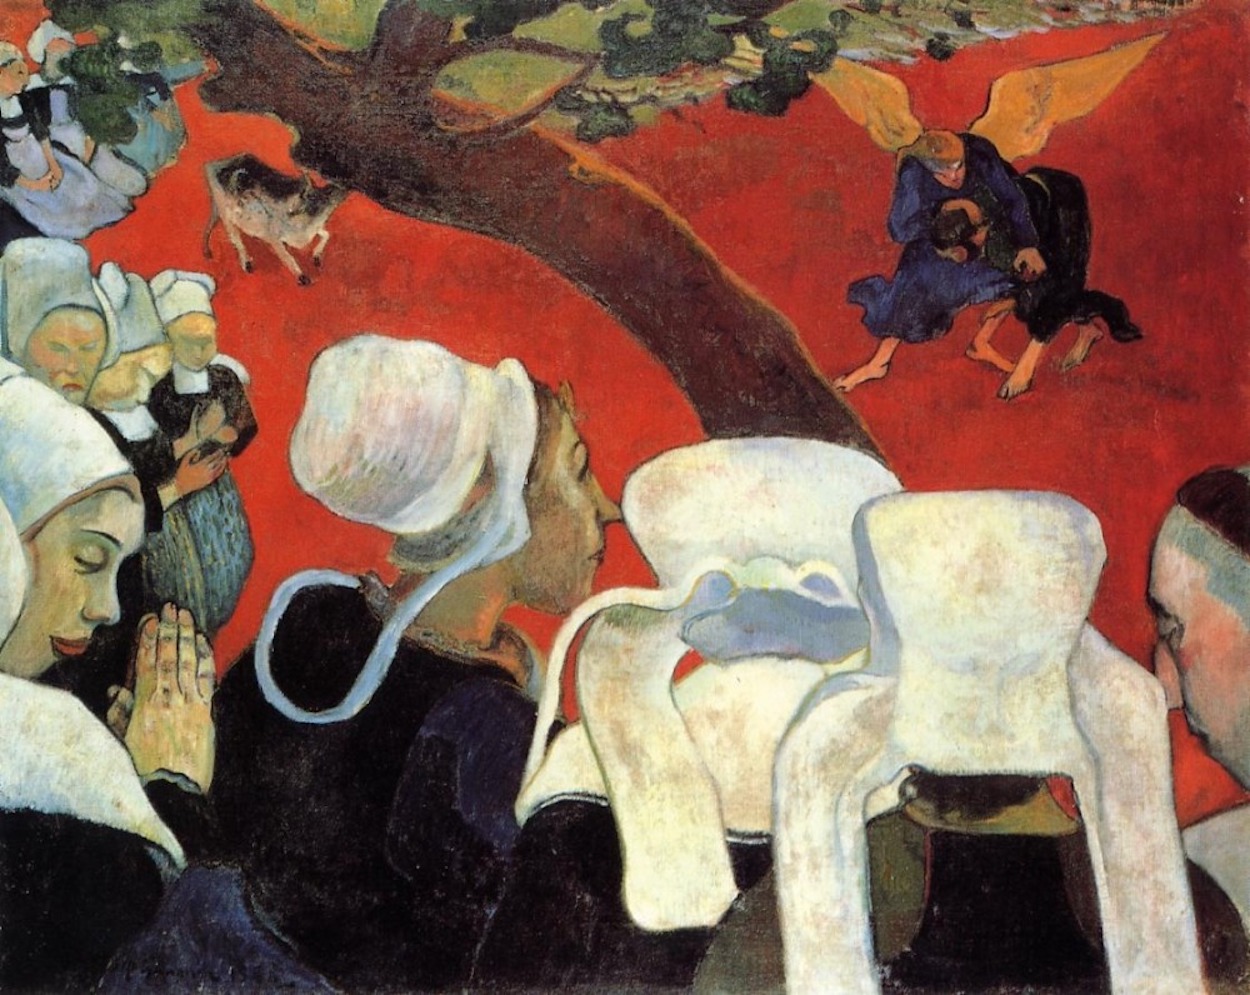 Het Visioen na de Preek by Paul Gauguin - 1888 - 74.4 x 93.1 cm 